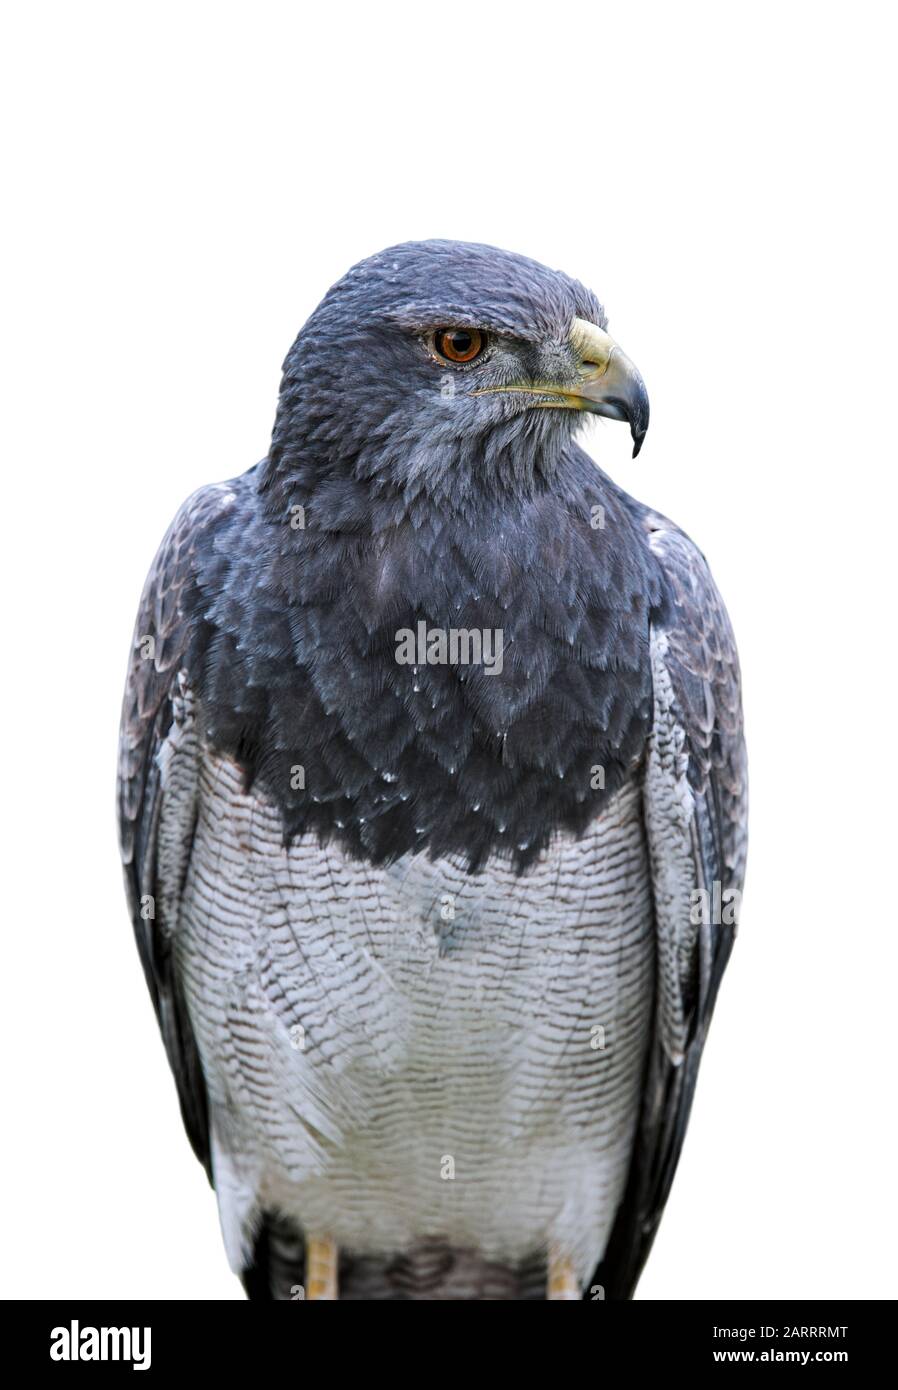 Buzzard-aquila nera / buzzard-aquila grigia / aquila blu cilena (Geranoetus melanoleucus) su sfondo bianco Foto Stock